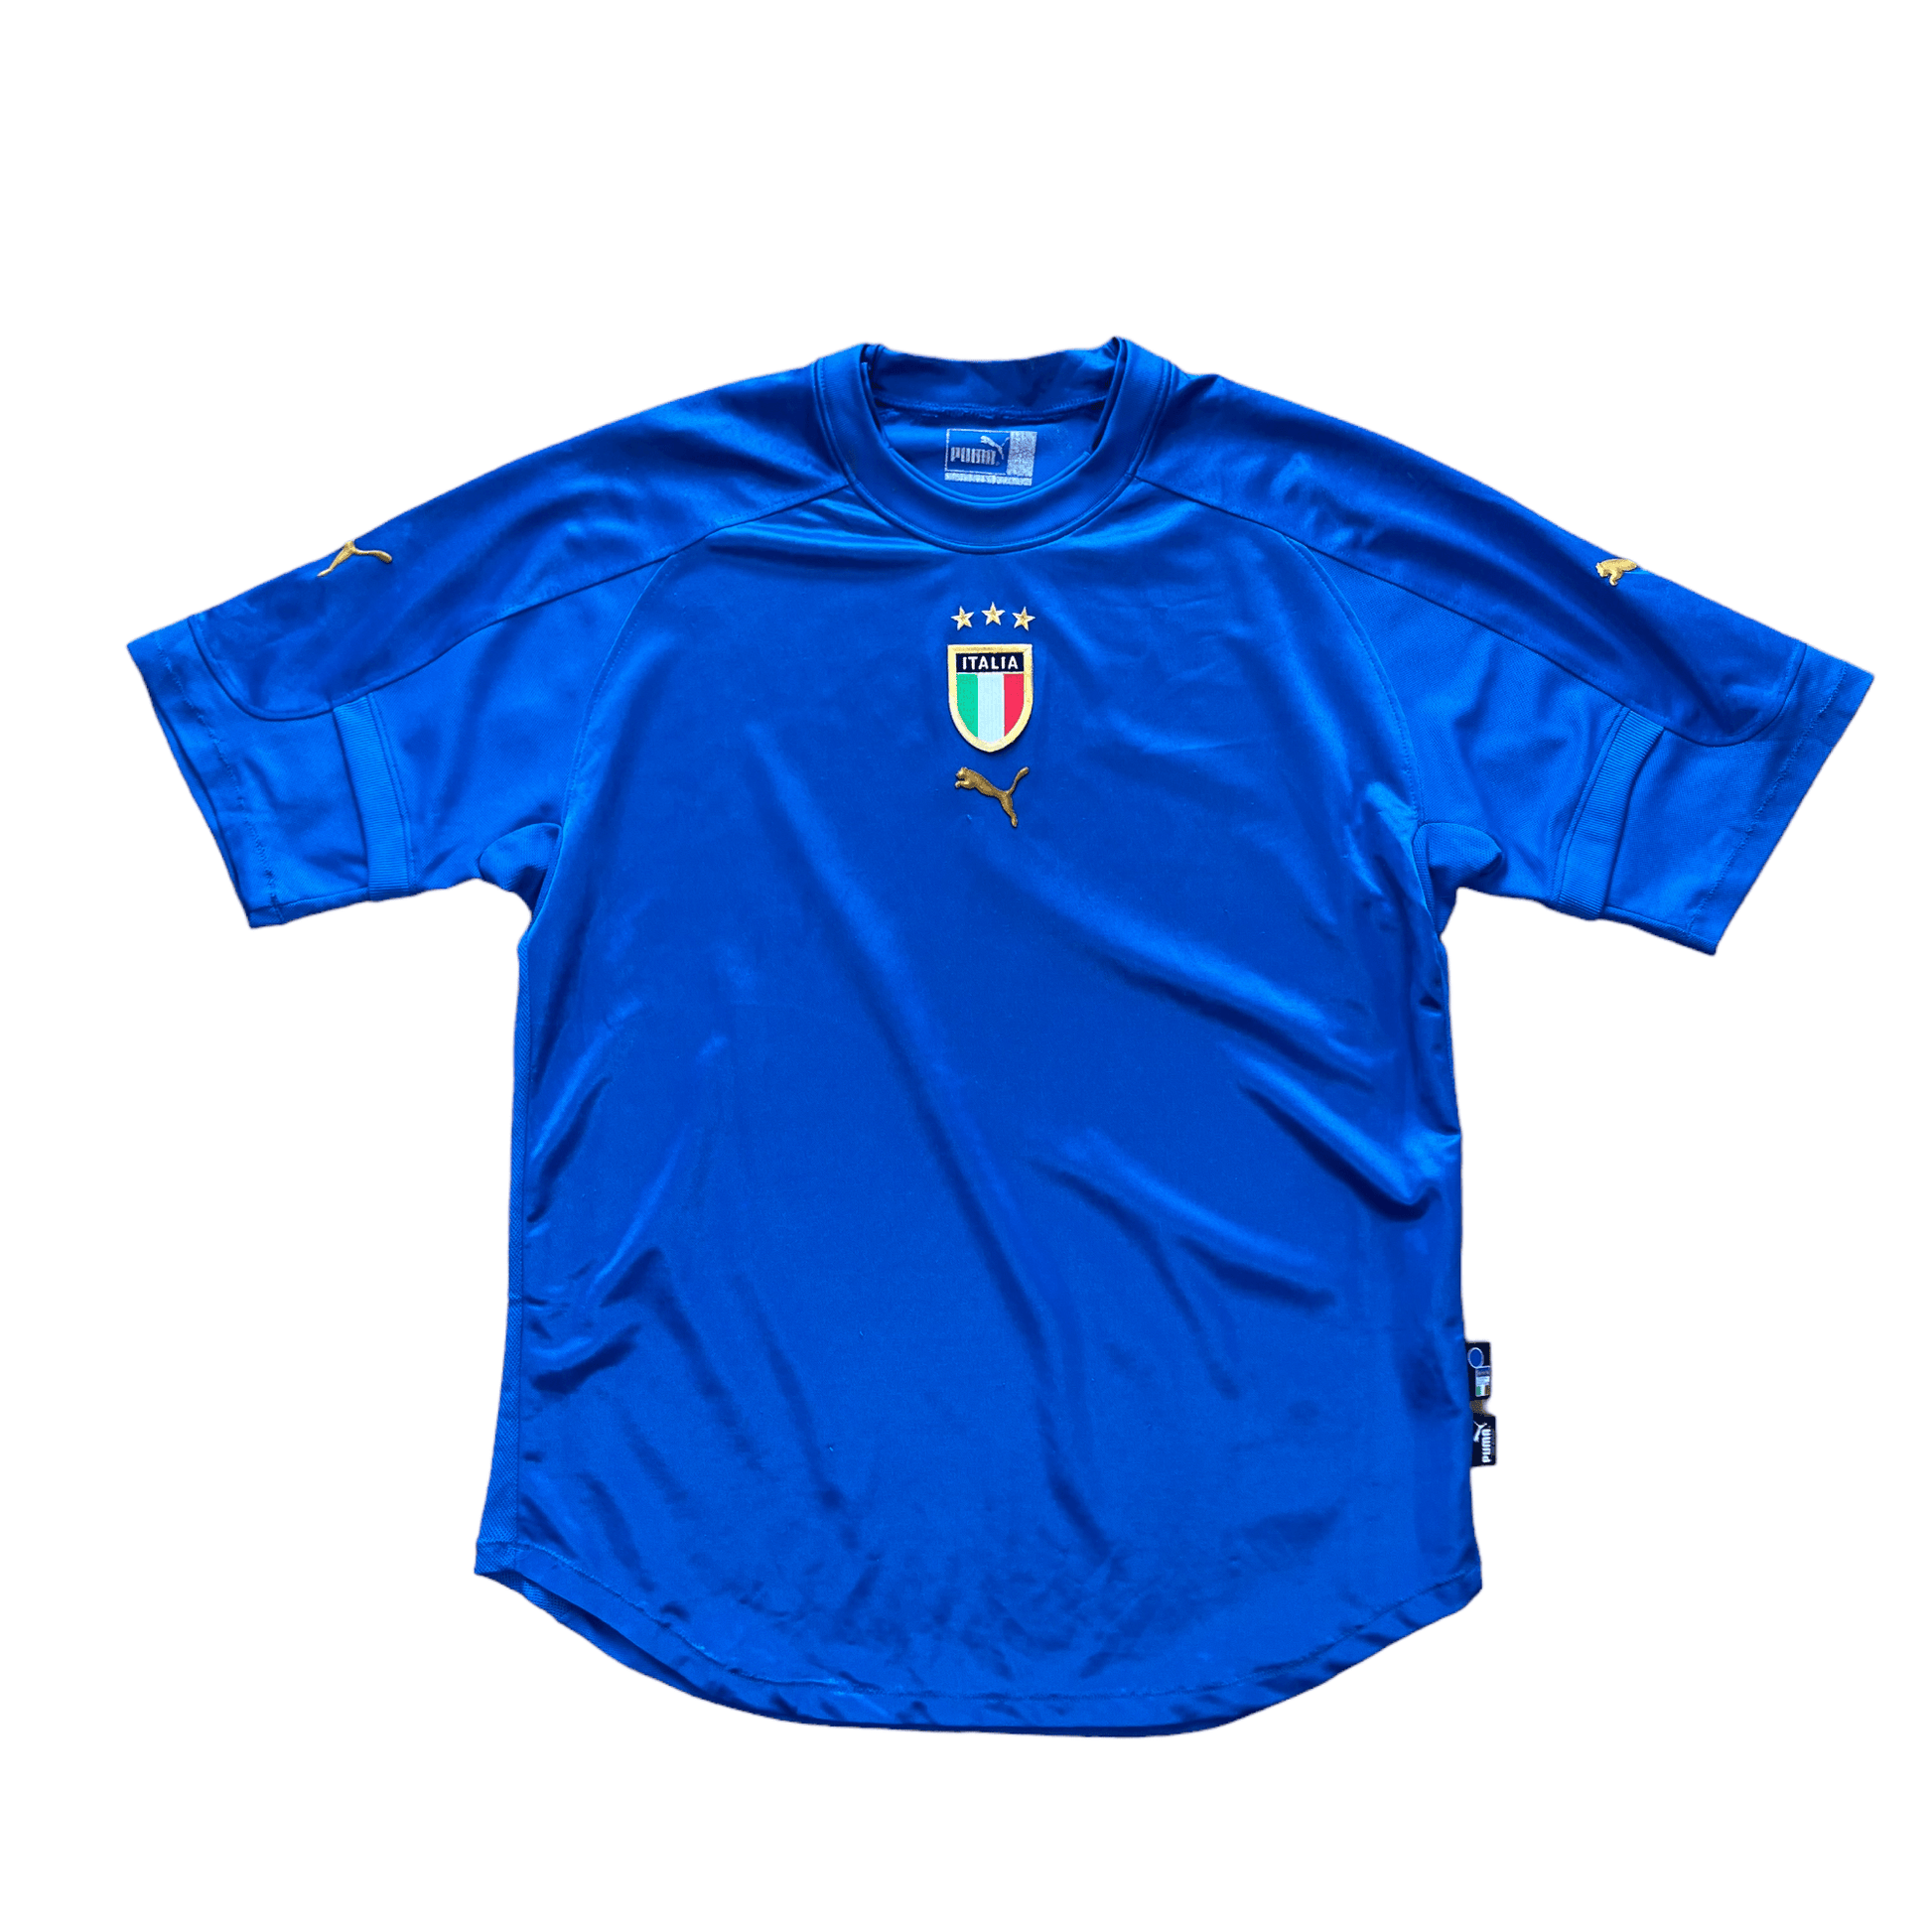 2004-06 Blue Puma Italy Home Shirt - Large - The Streetwear Studio